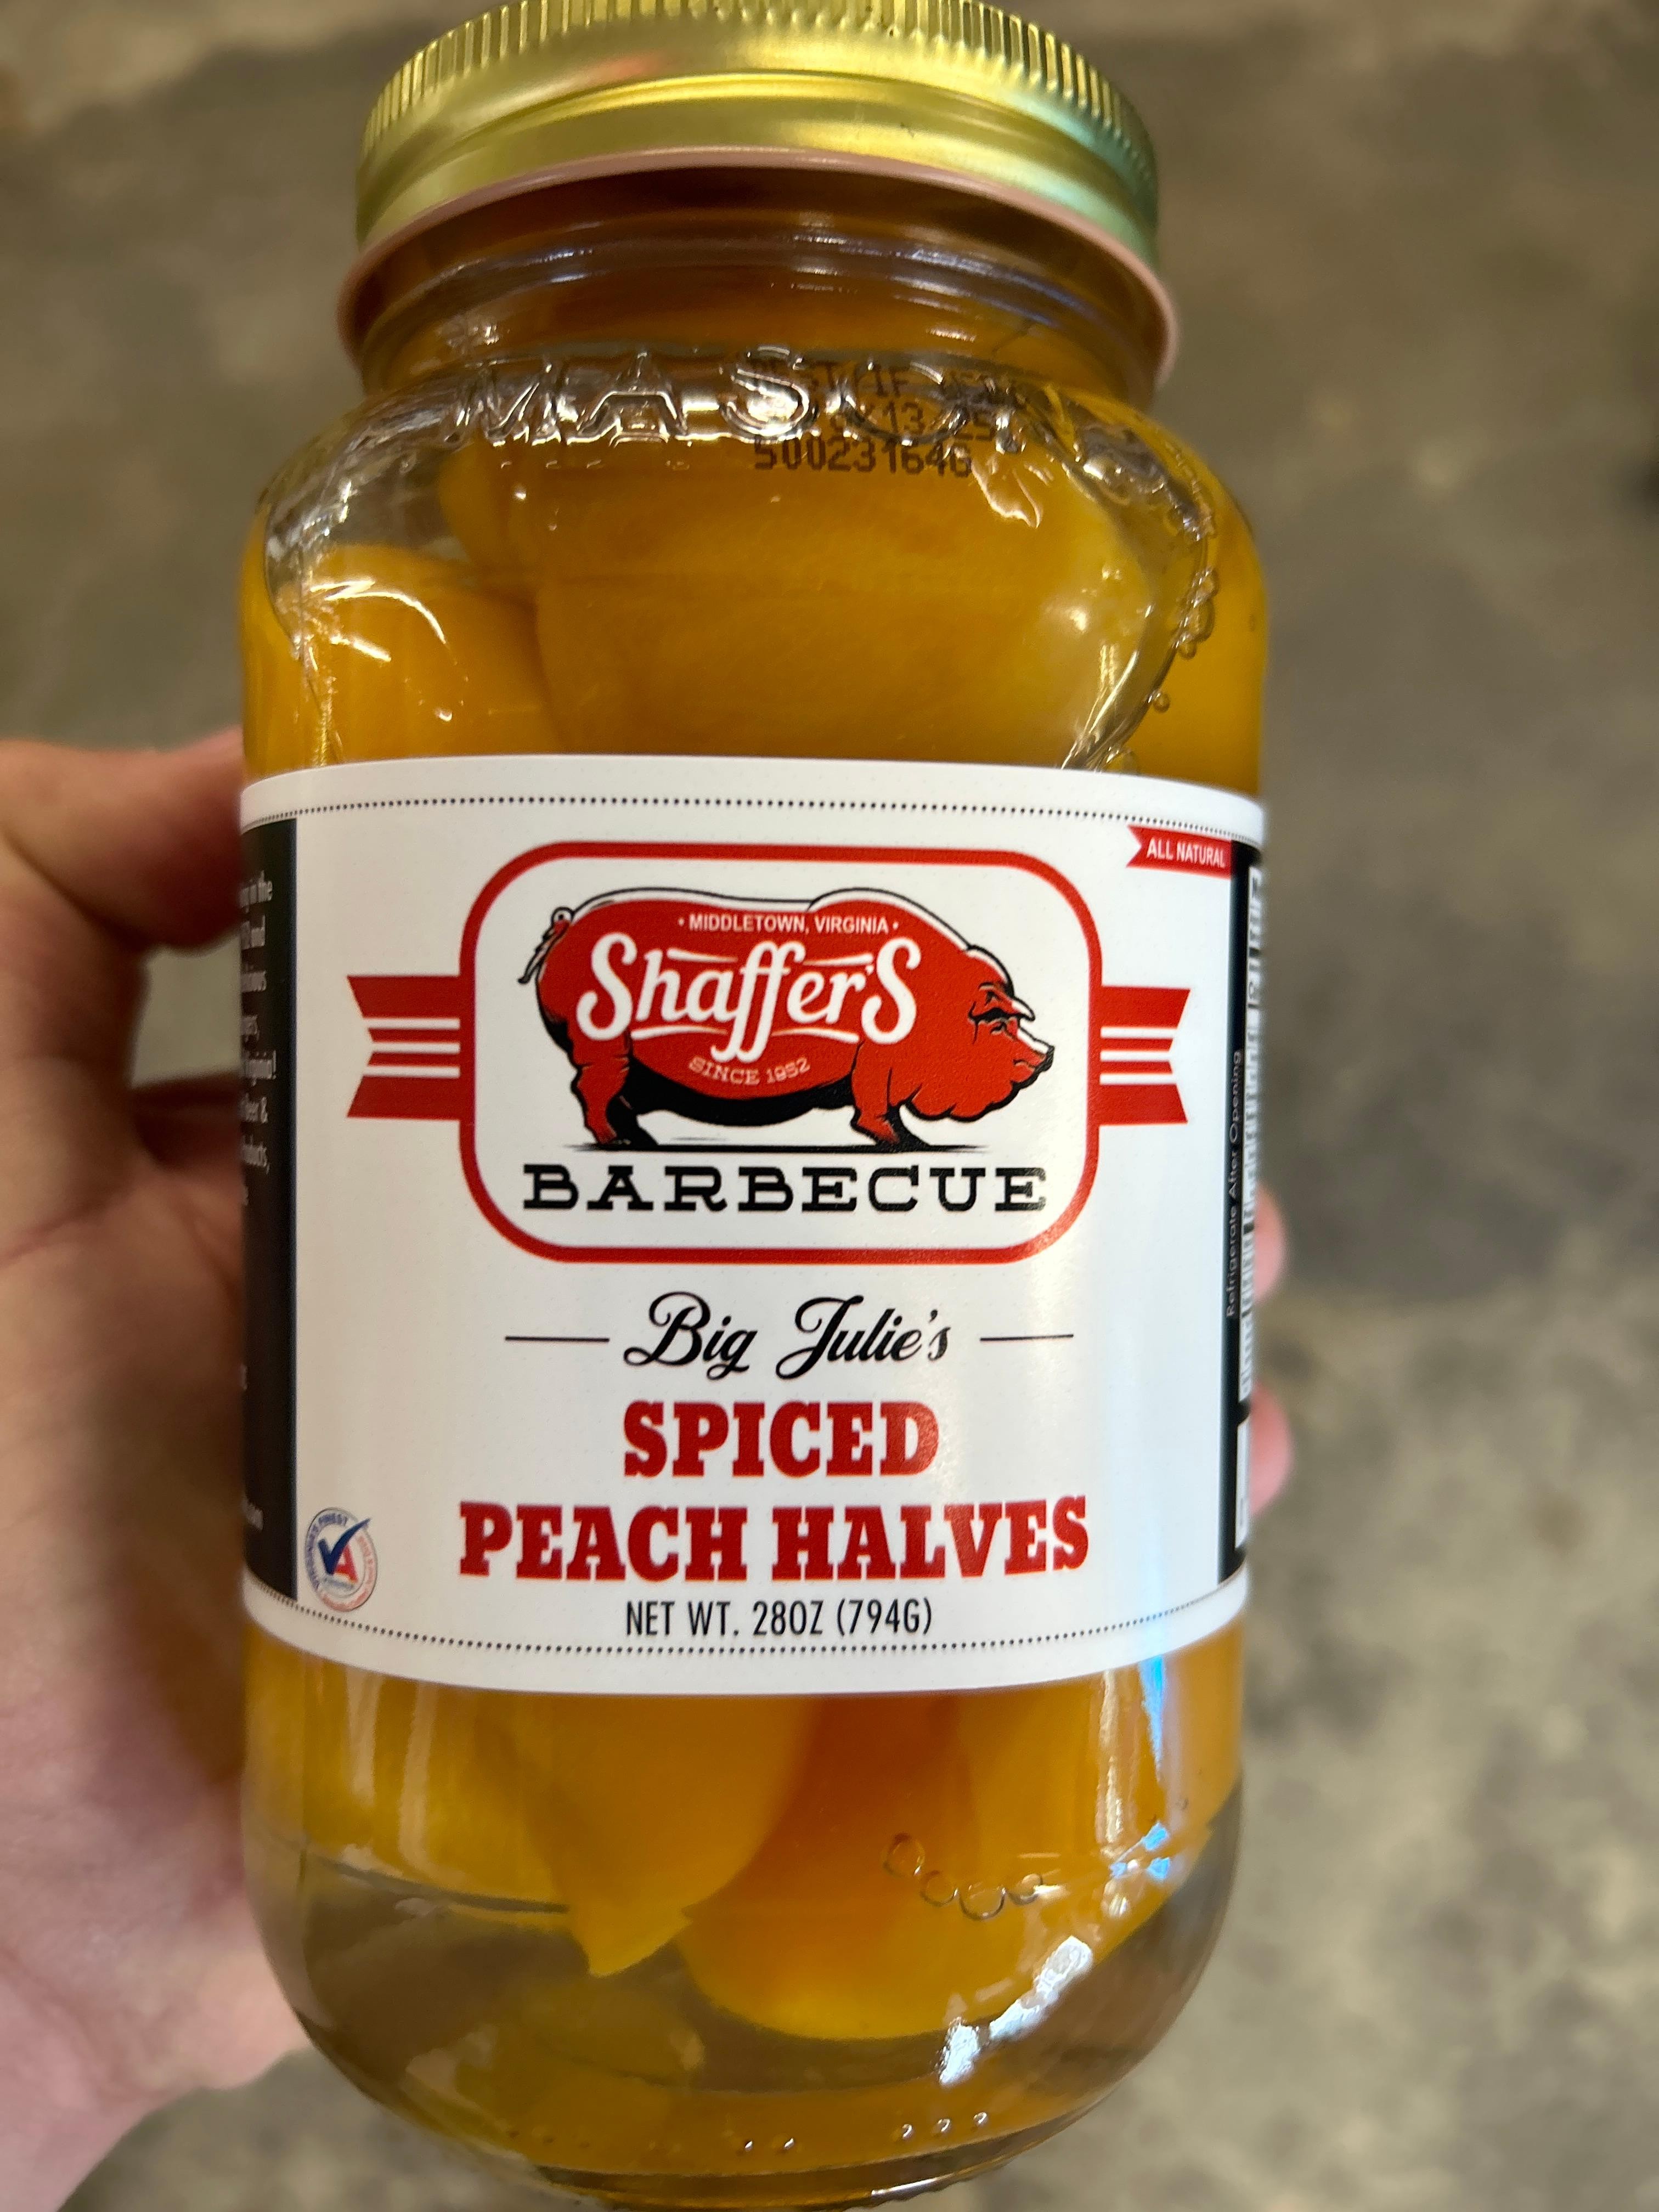 Big Julie's Spiced Peach Halves